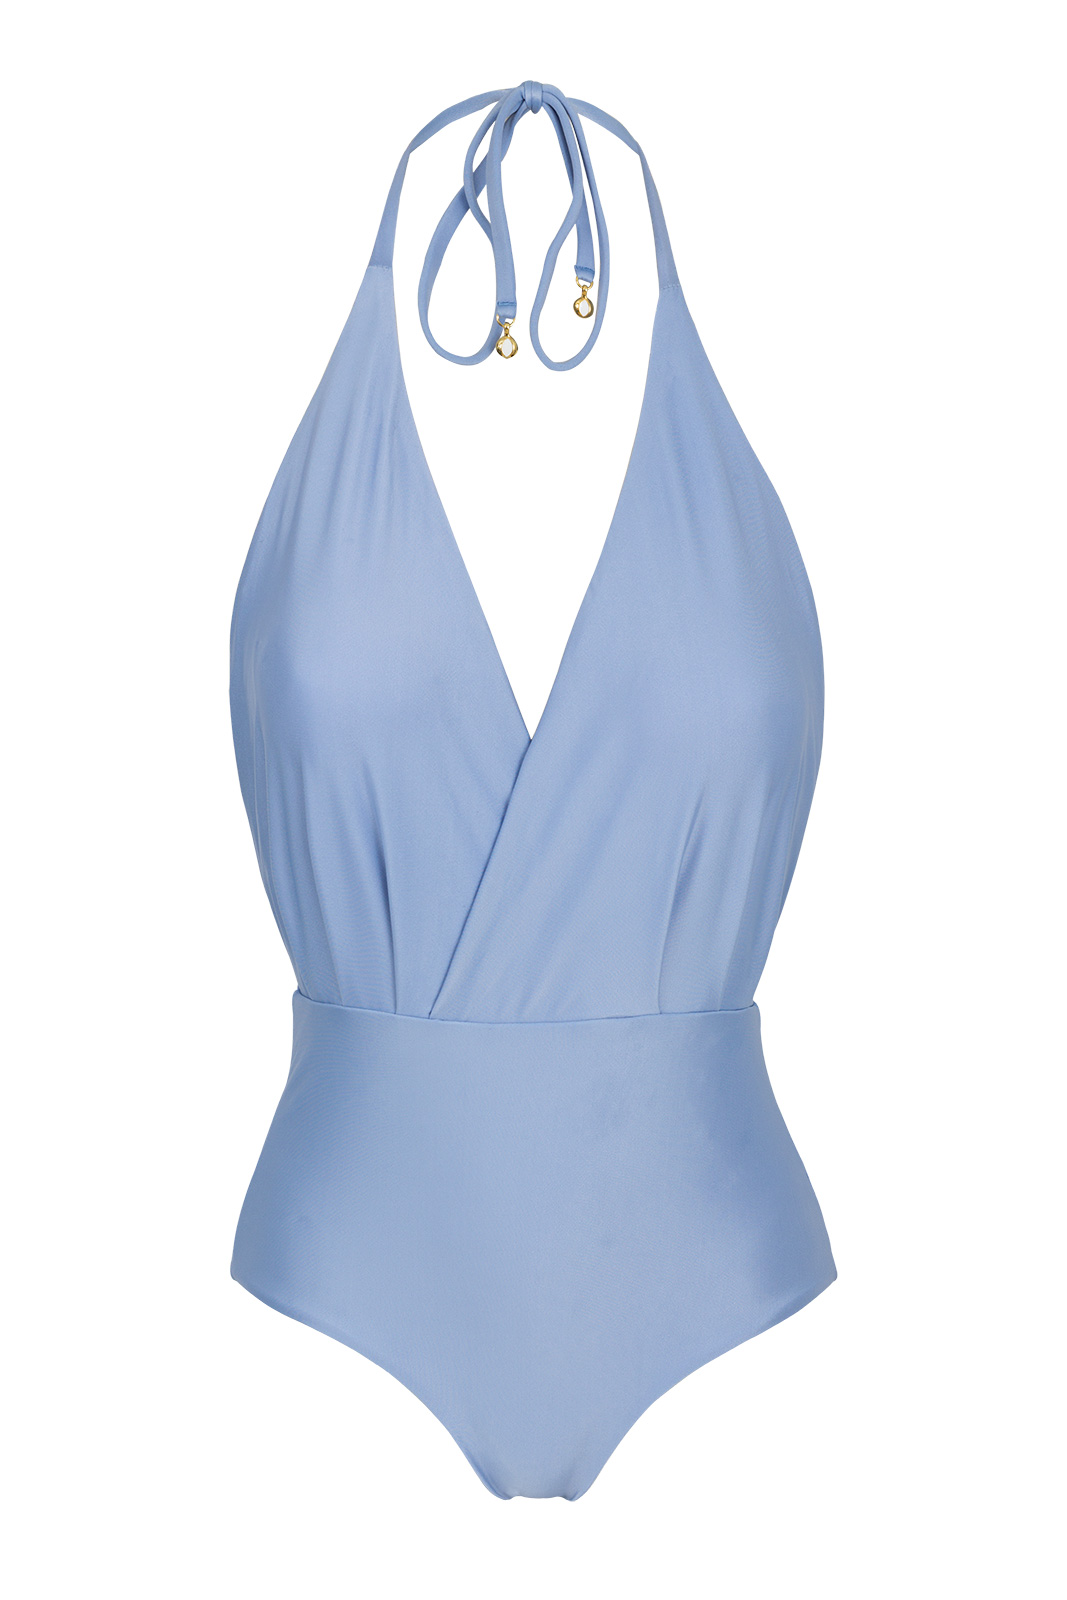 Denim Blue Textured One-piece Swimsuit - Garoa Transpassado - Rio de Sol